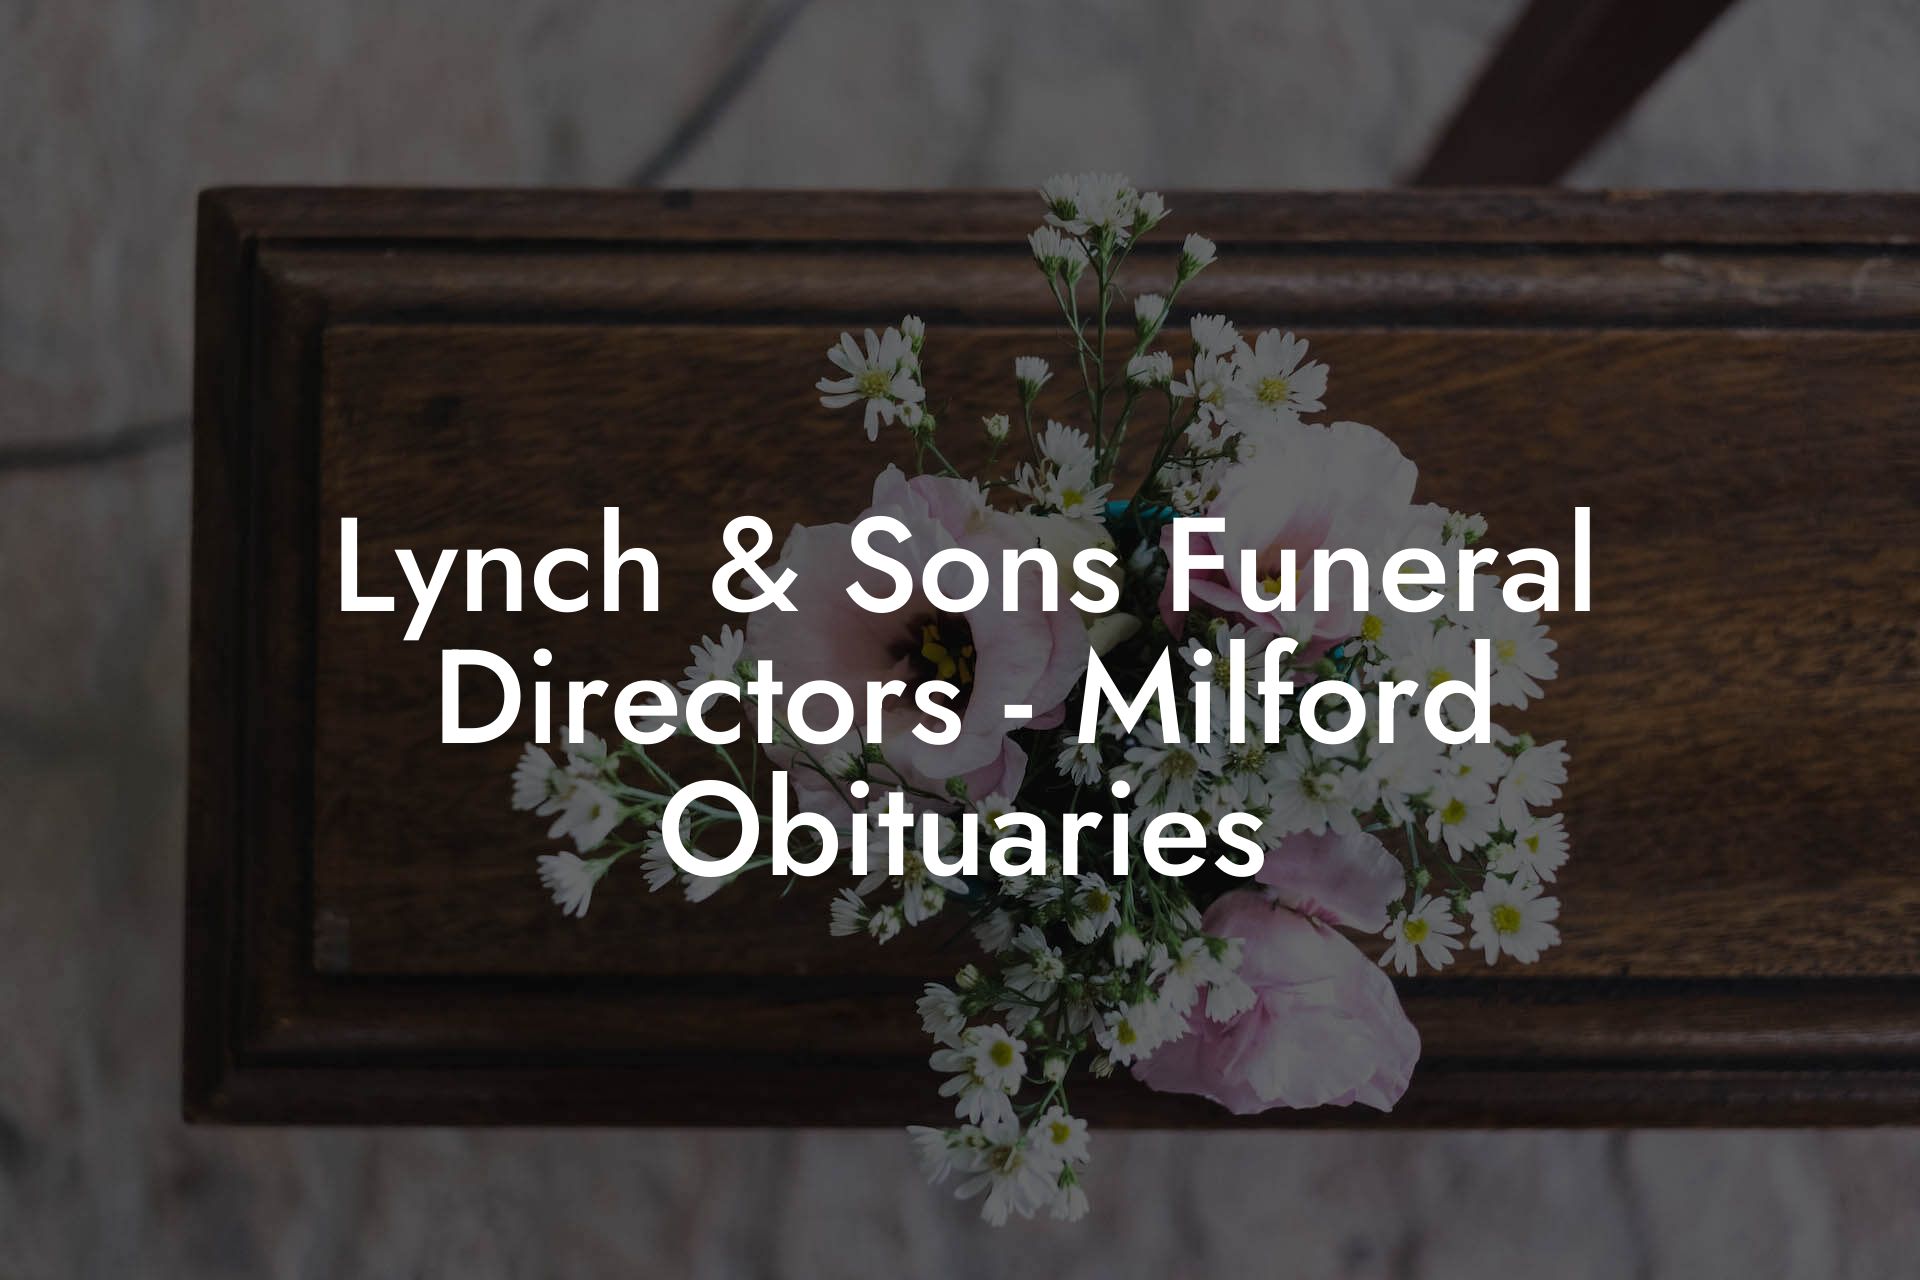 Lynch & Sons Funeral Directors - Milford Obituaries